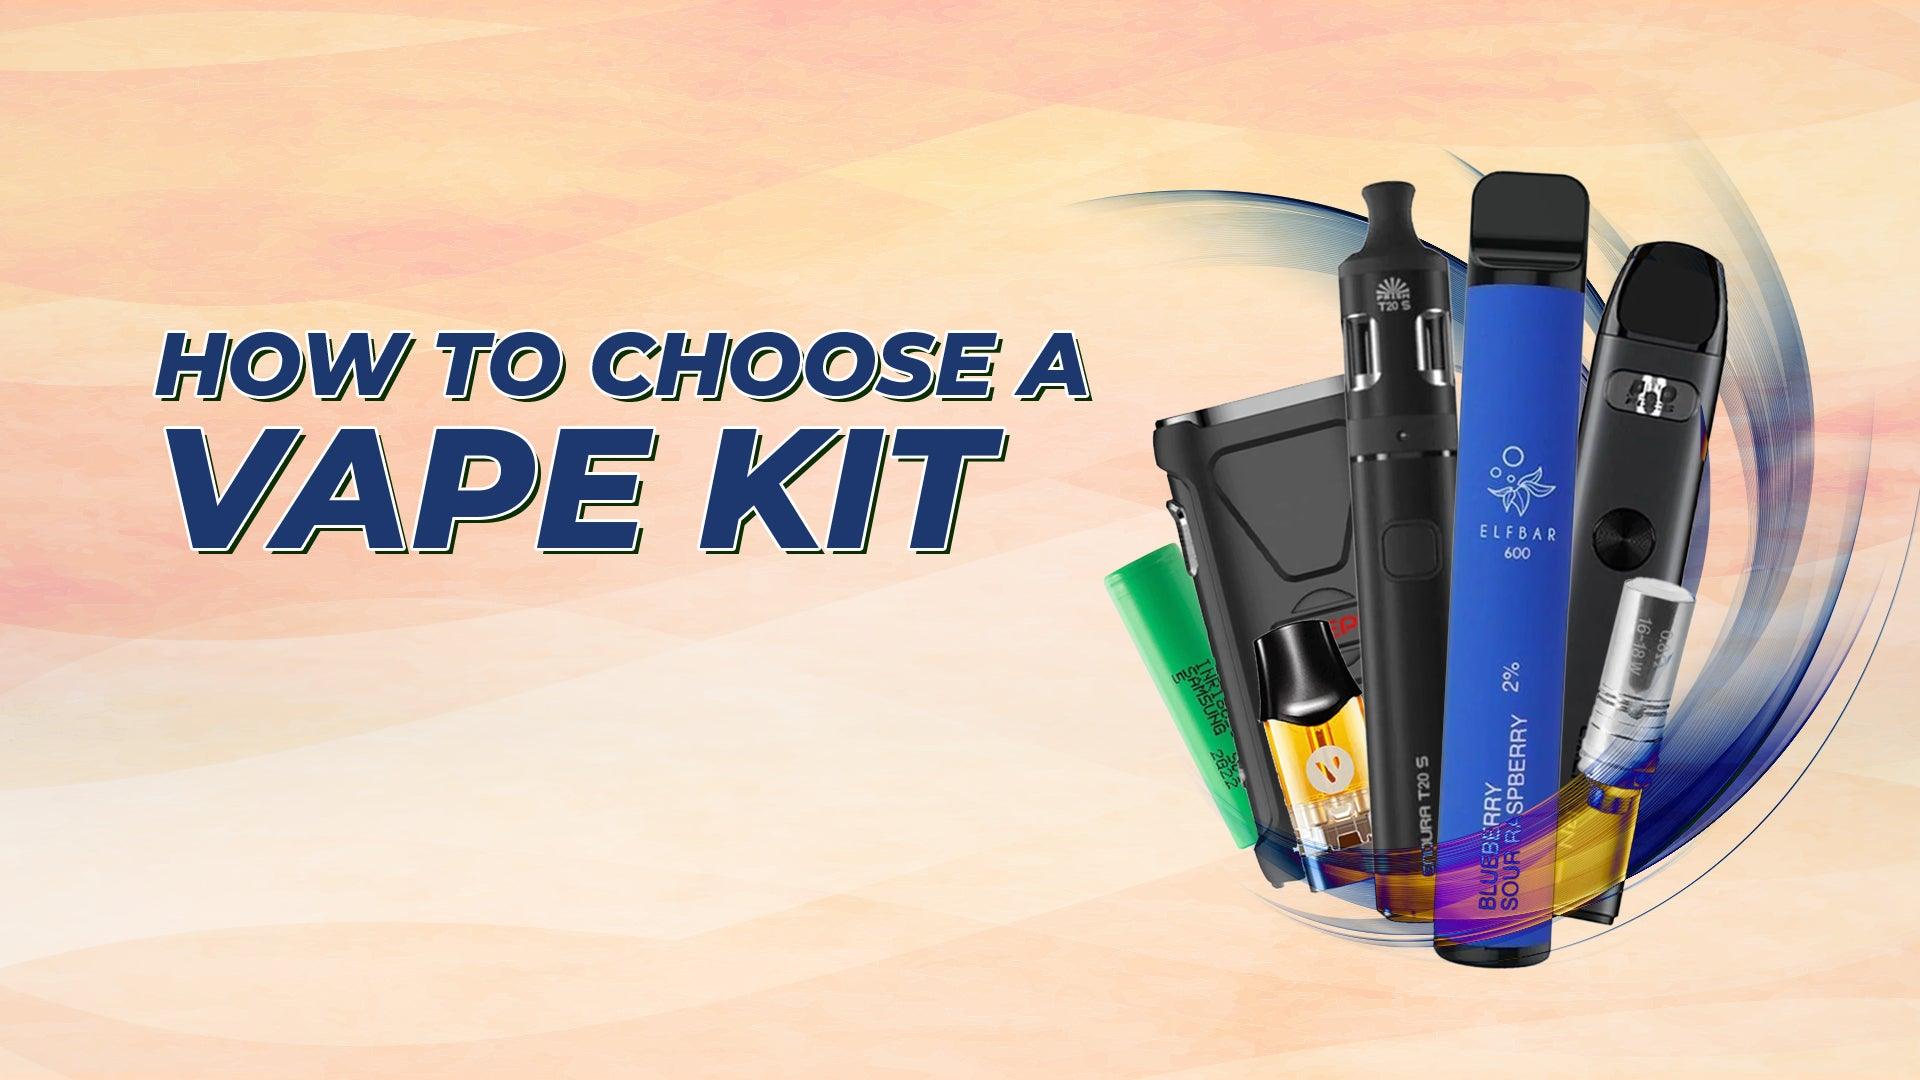 How to Choose a Vape Kit - Category:Vape Kits, Sub Category:Disposables, Sub Category:Pod Kits, Sub Category:Starter Kits, Sub Category:Sub Ohm